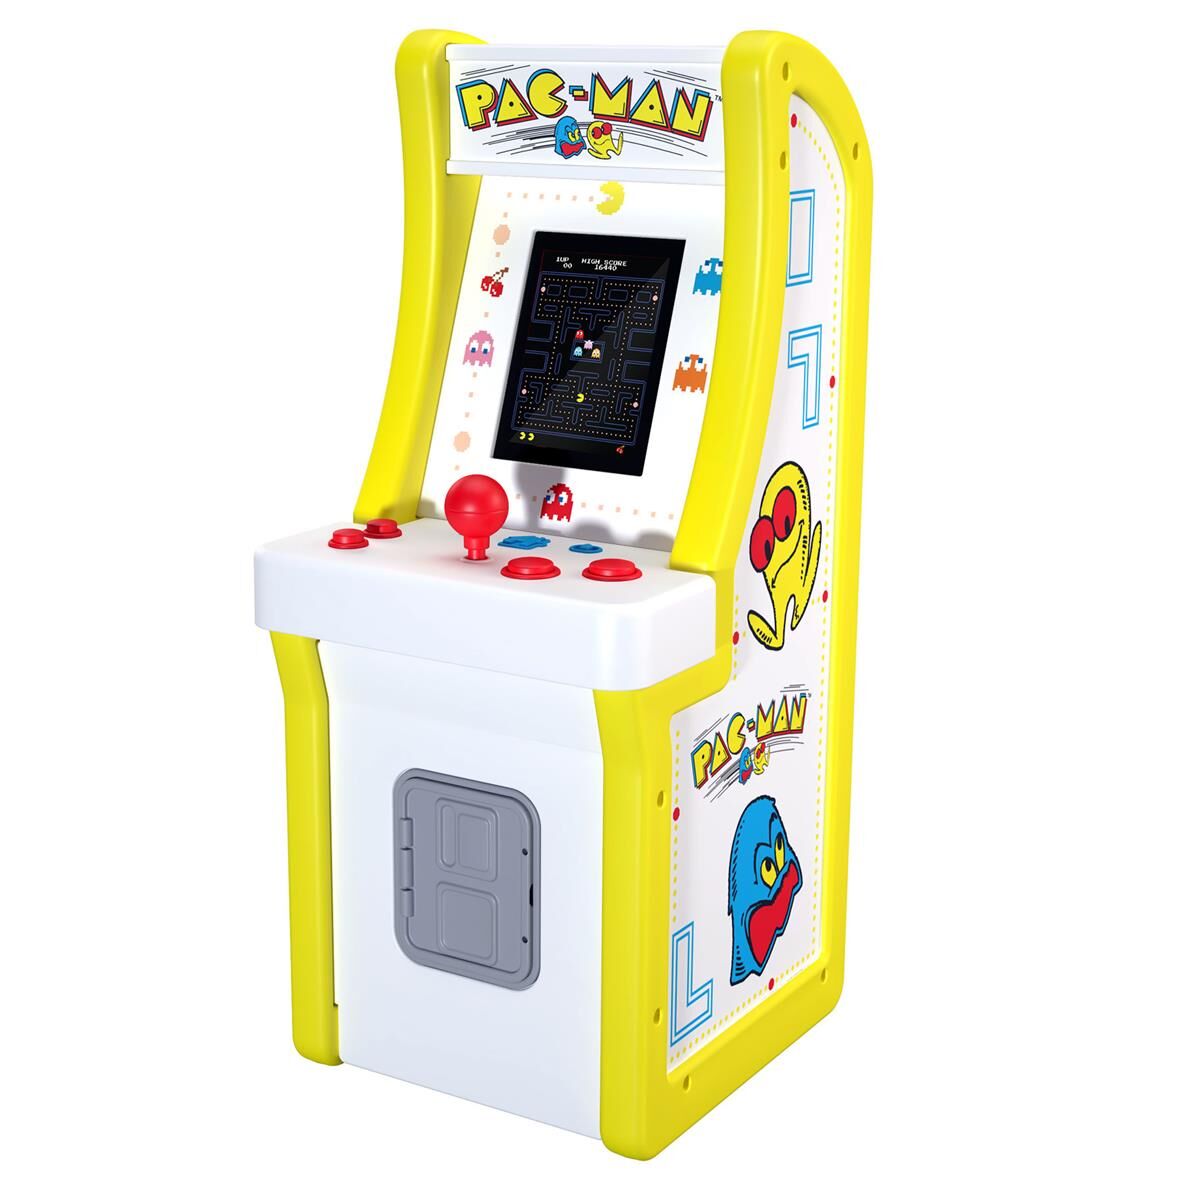 Tastemaker Arcade1Up Jr. Pac-Man Arcade Game Machine without Stool